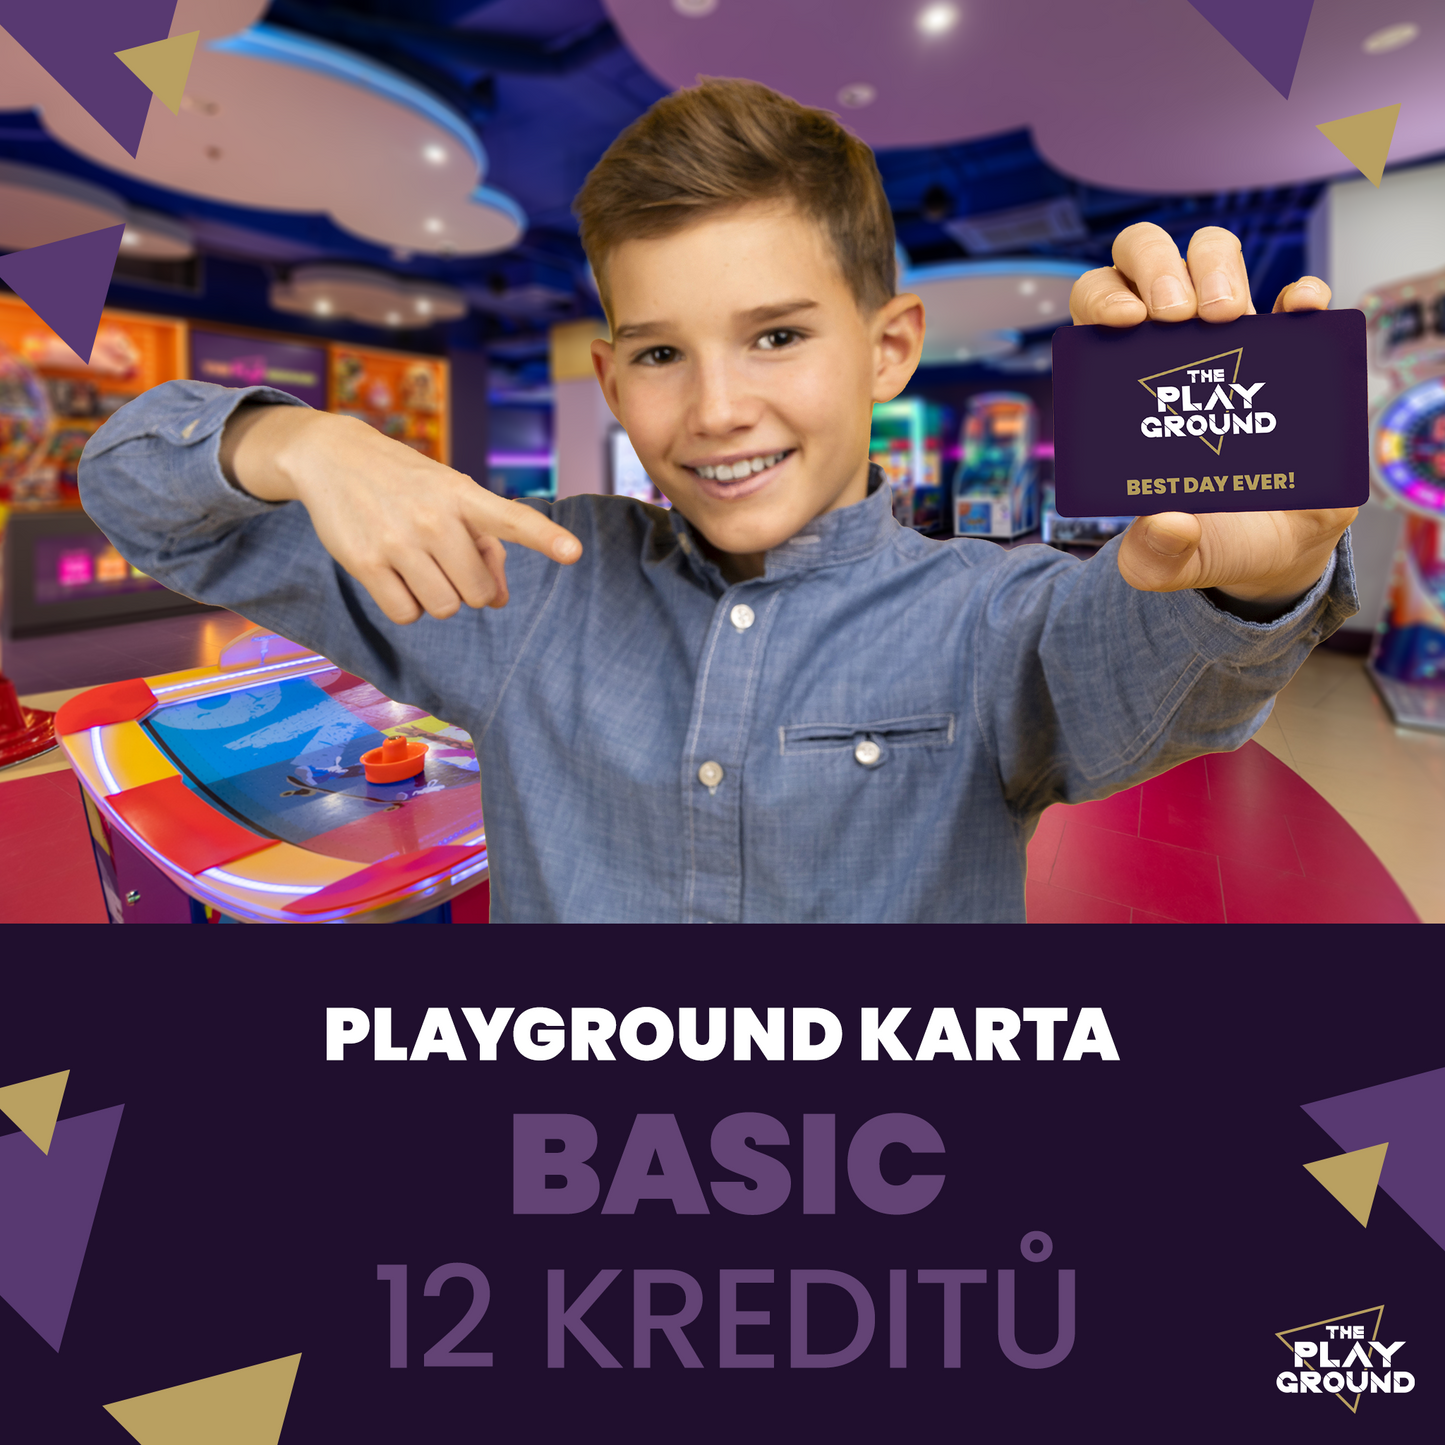 Playground karta BASIC - 12 kreditů